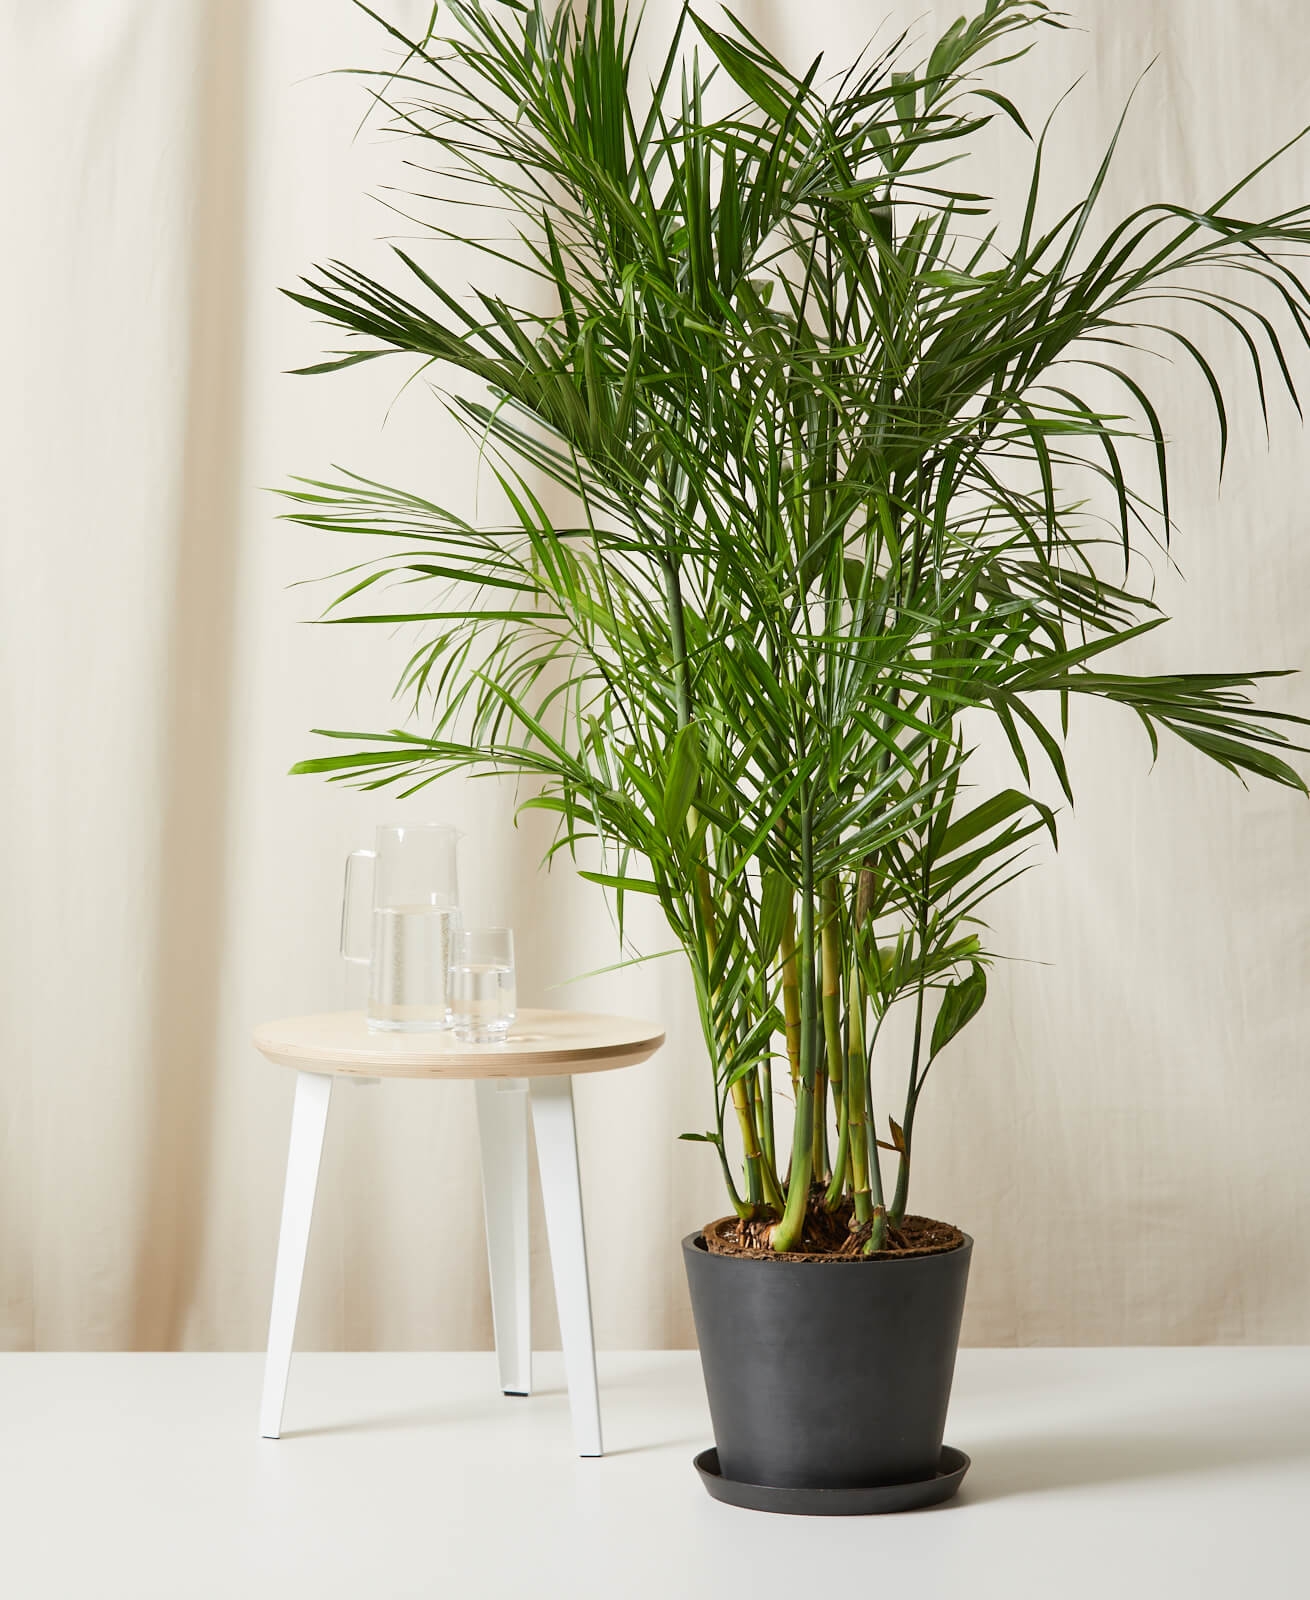 Bamboo Palm, Charcoal Pot - Image 0